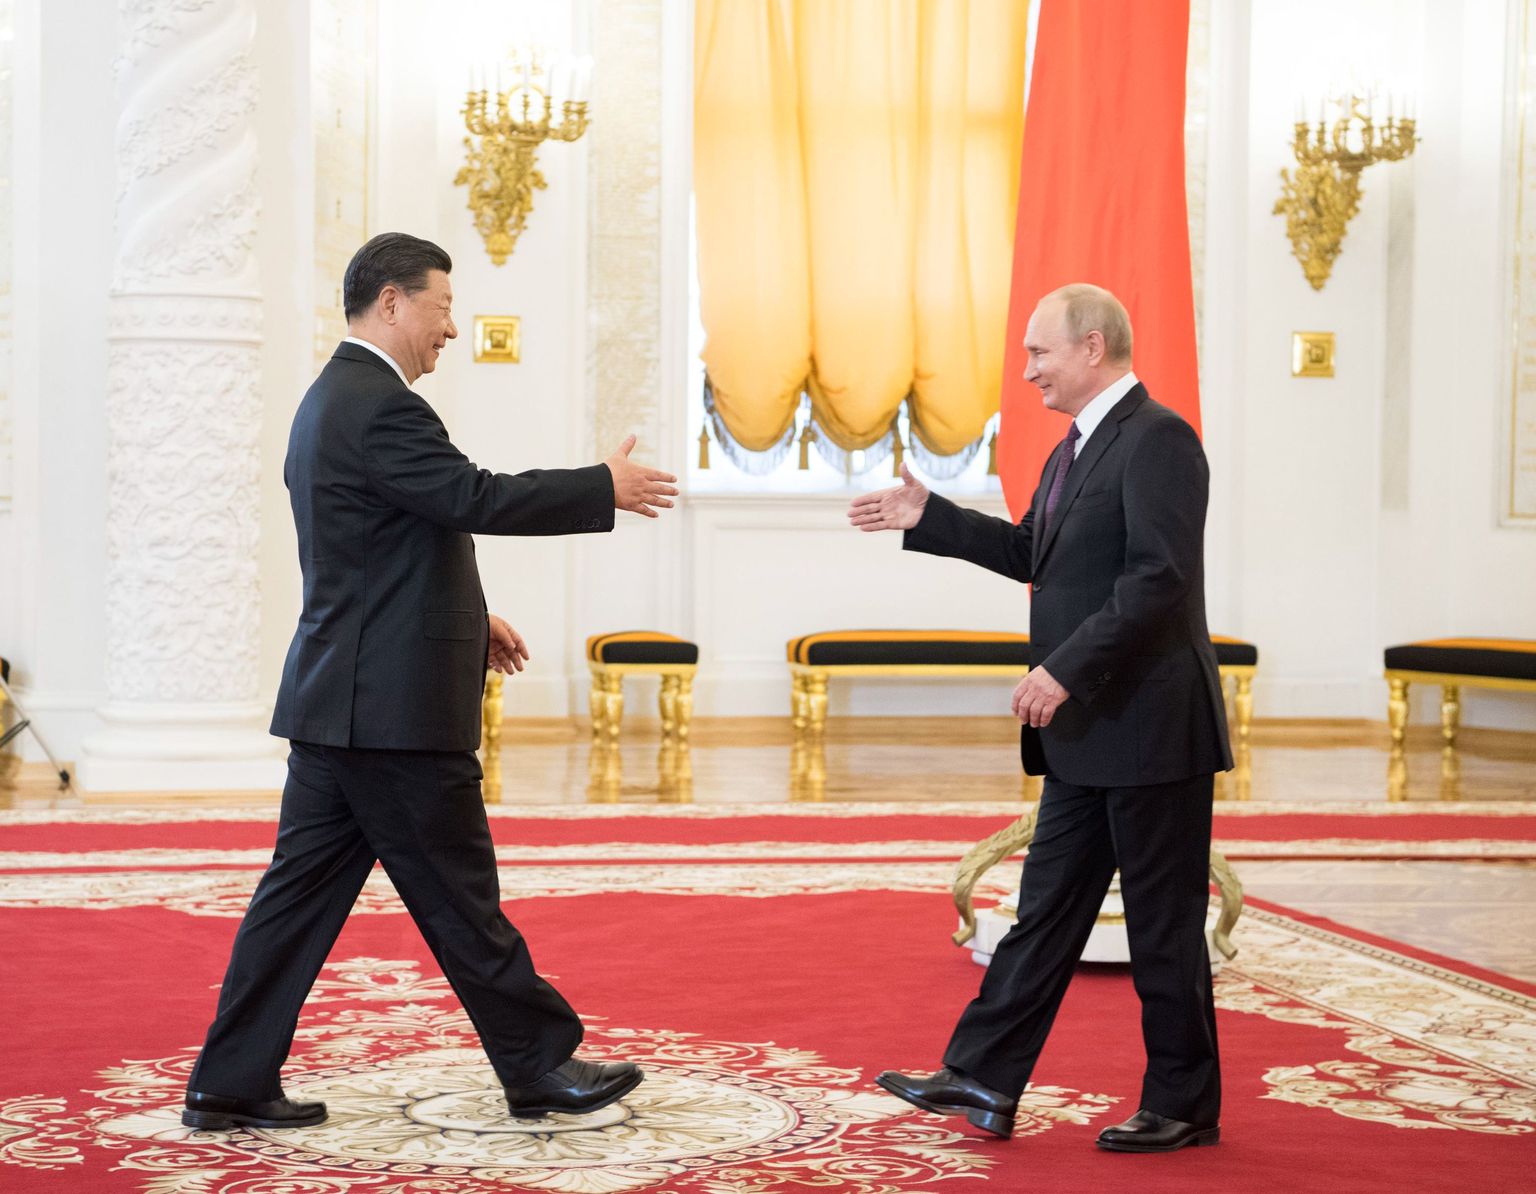 Hiina president Xi Jinping (vasakul) ja Vene ametivend Vladimir Putin.